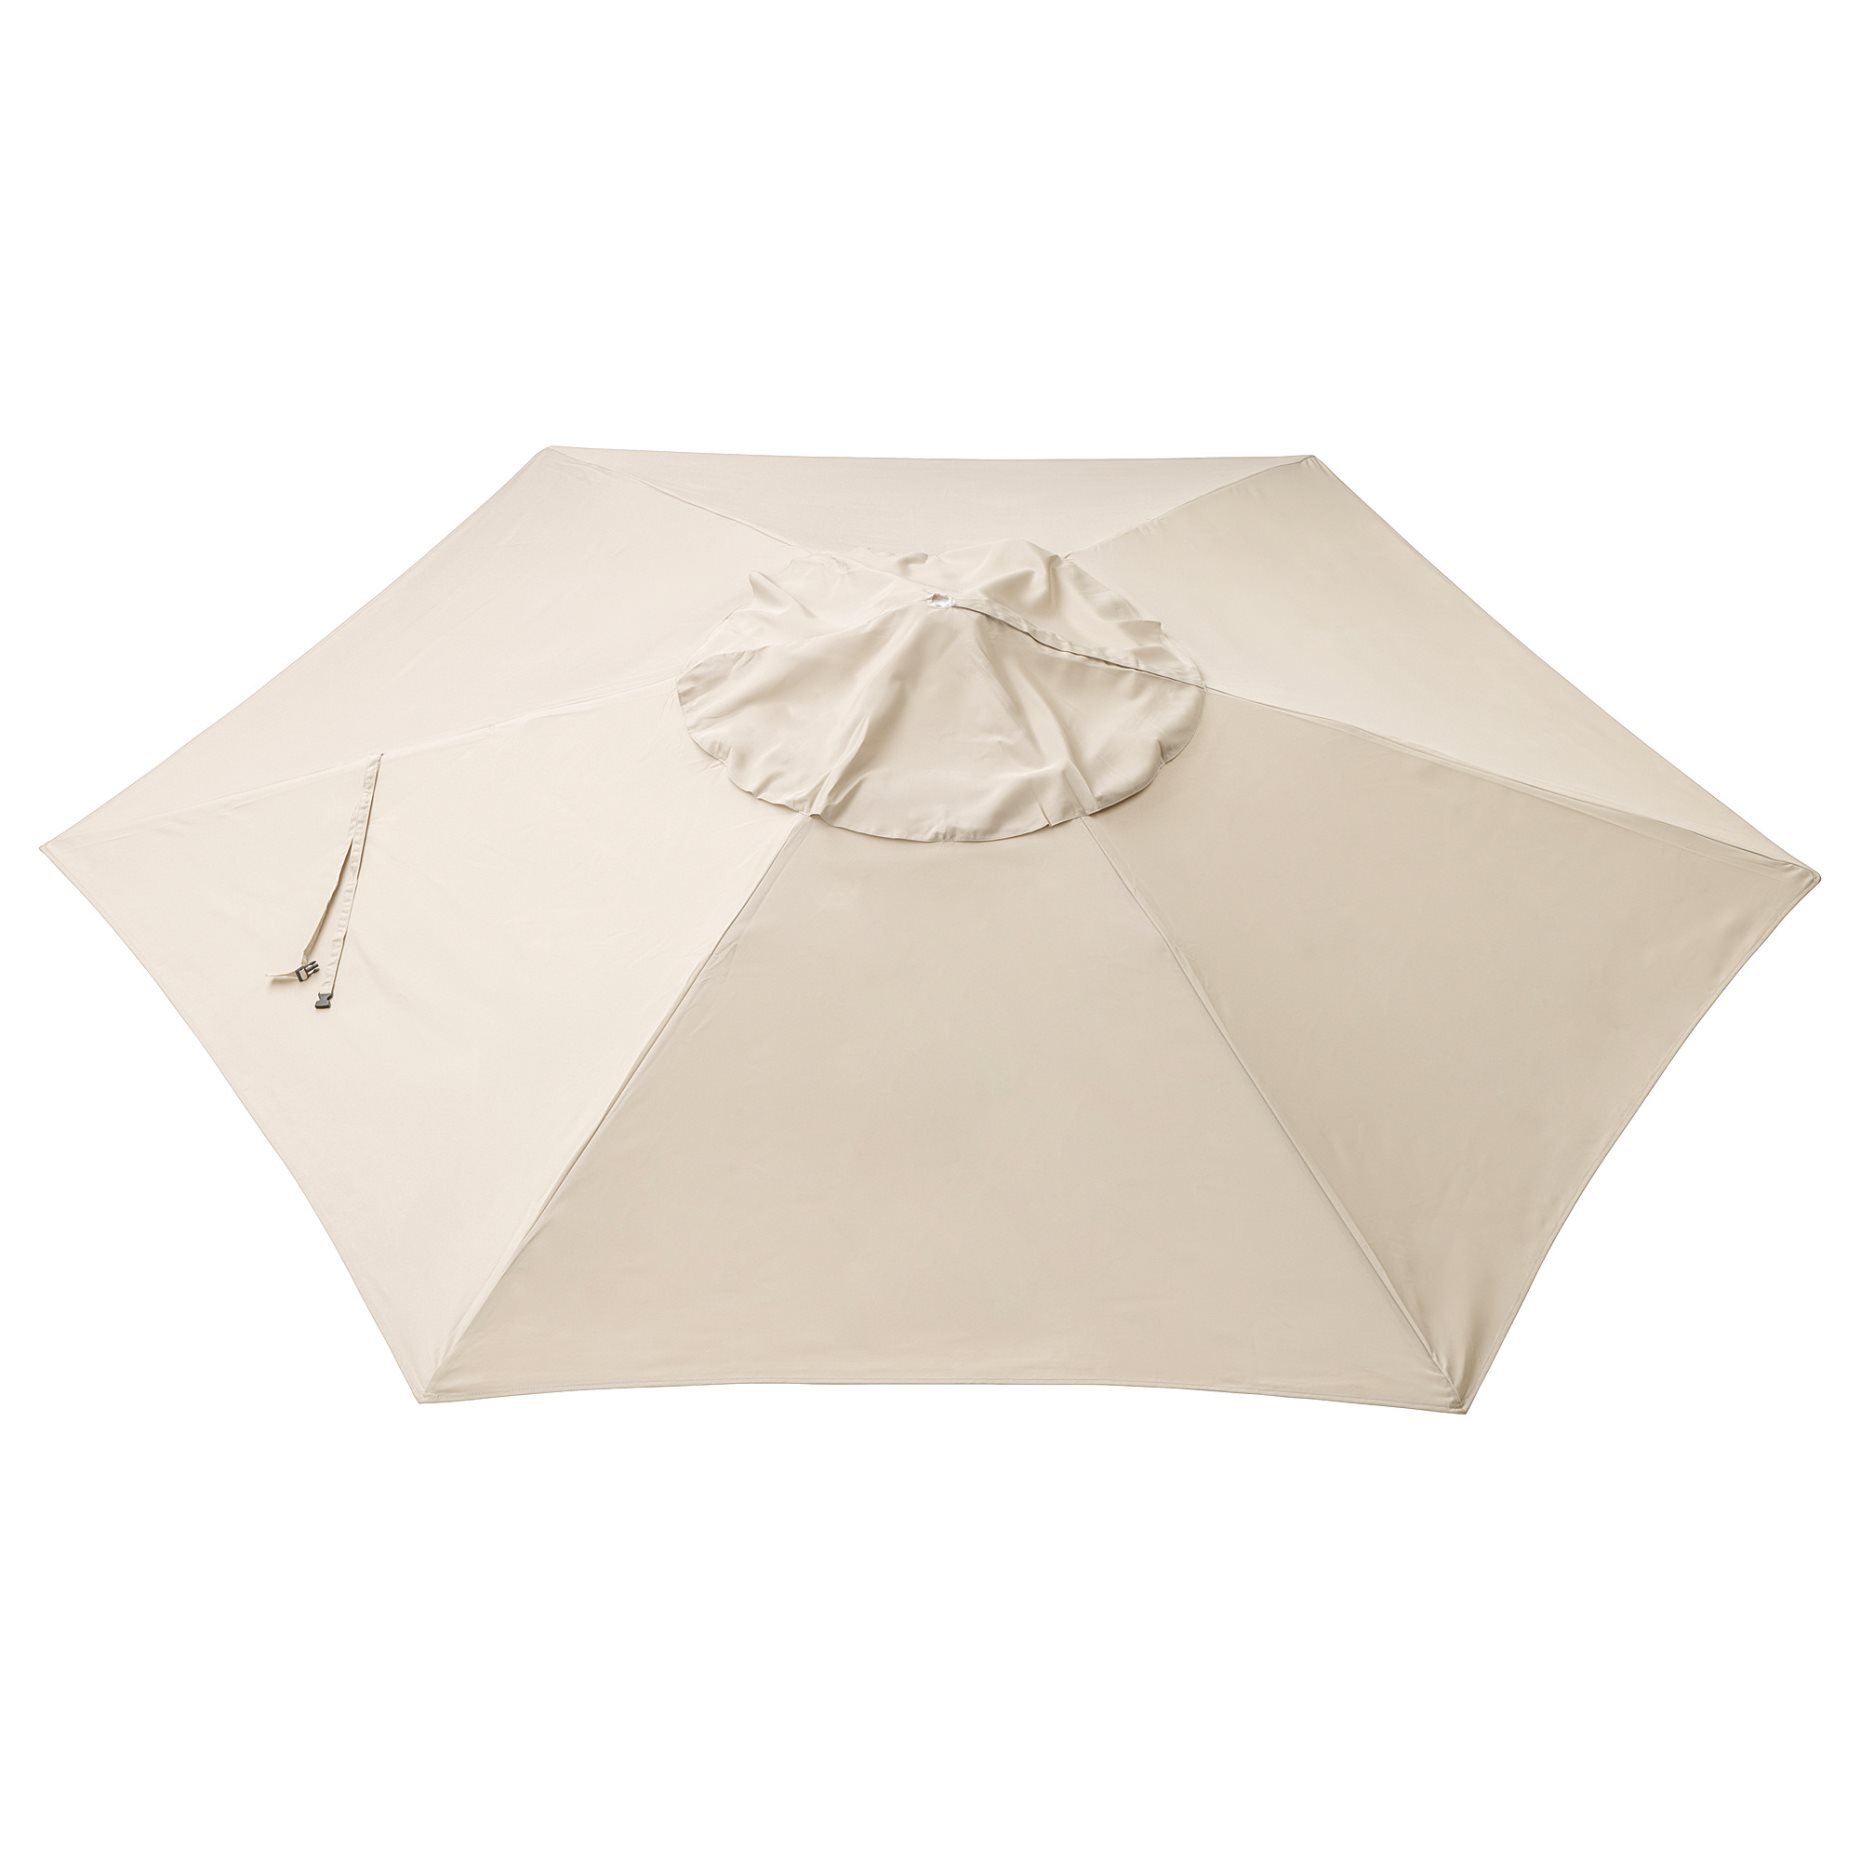 LINDÖJA, parasol canopy, 603.961.21